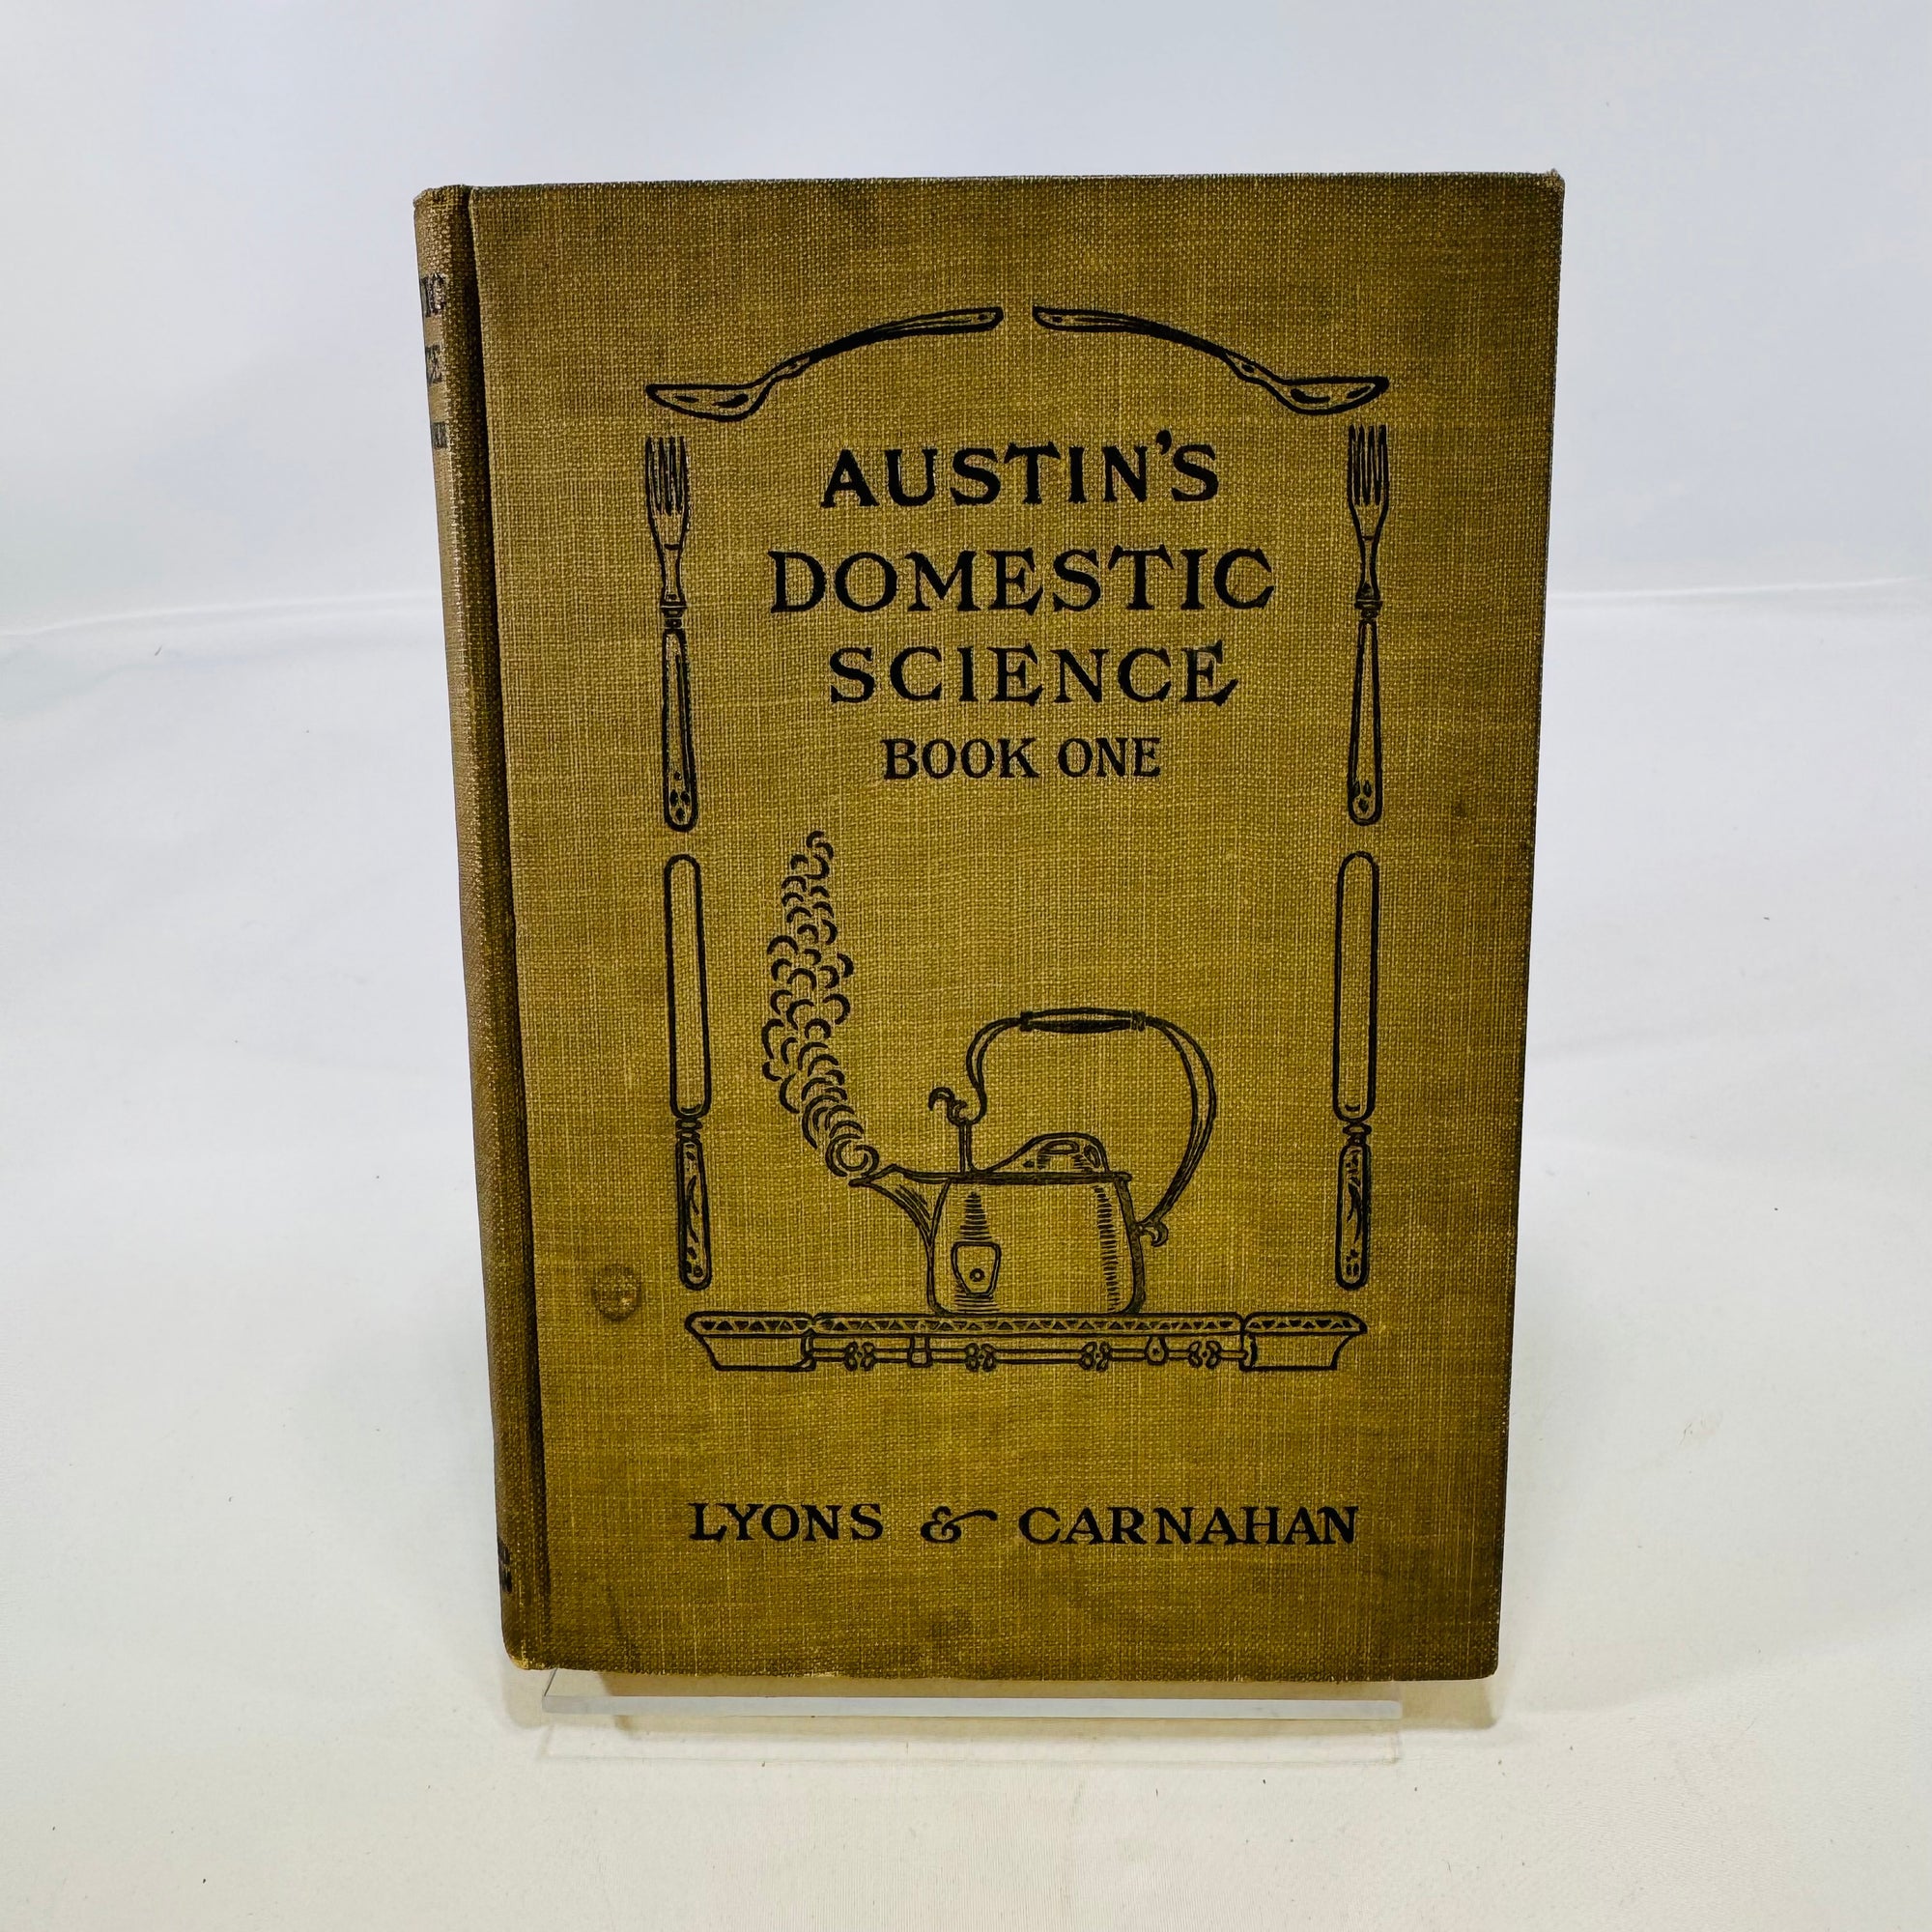 Austin's Domestic Science Book One by Bertha J. Ausitn 1914 Lyons & Carnahan